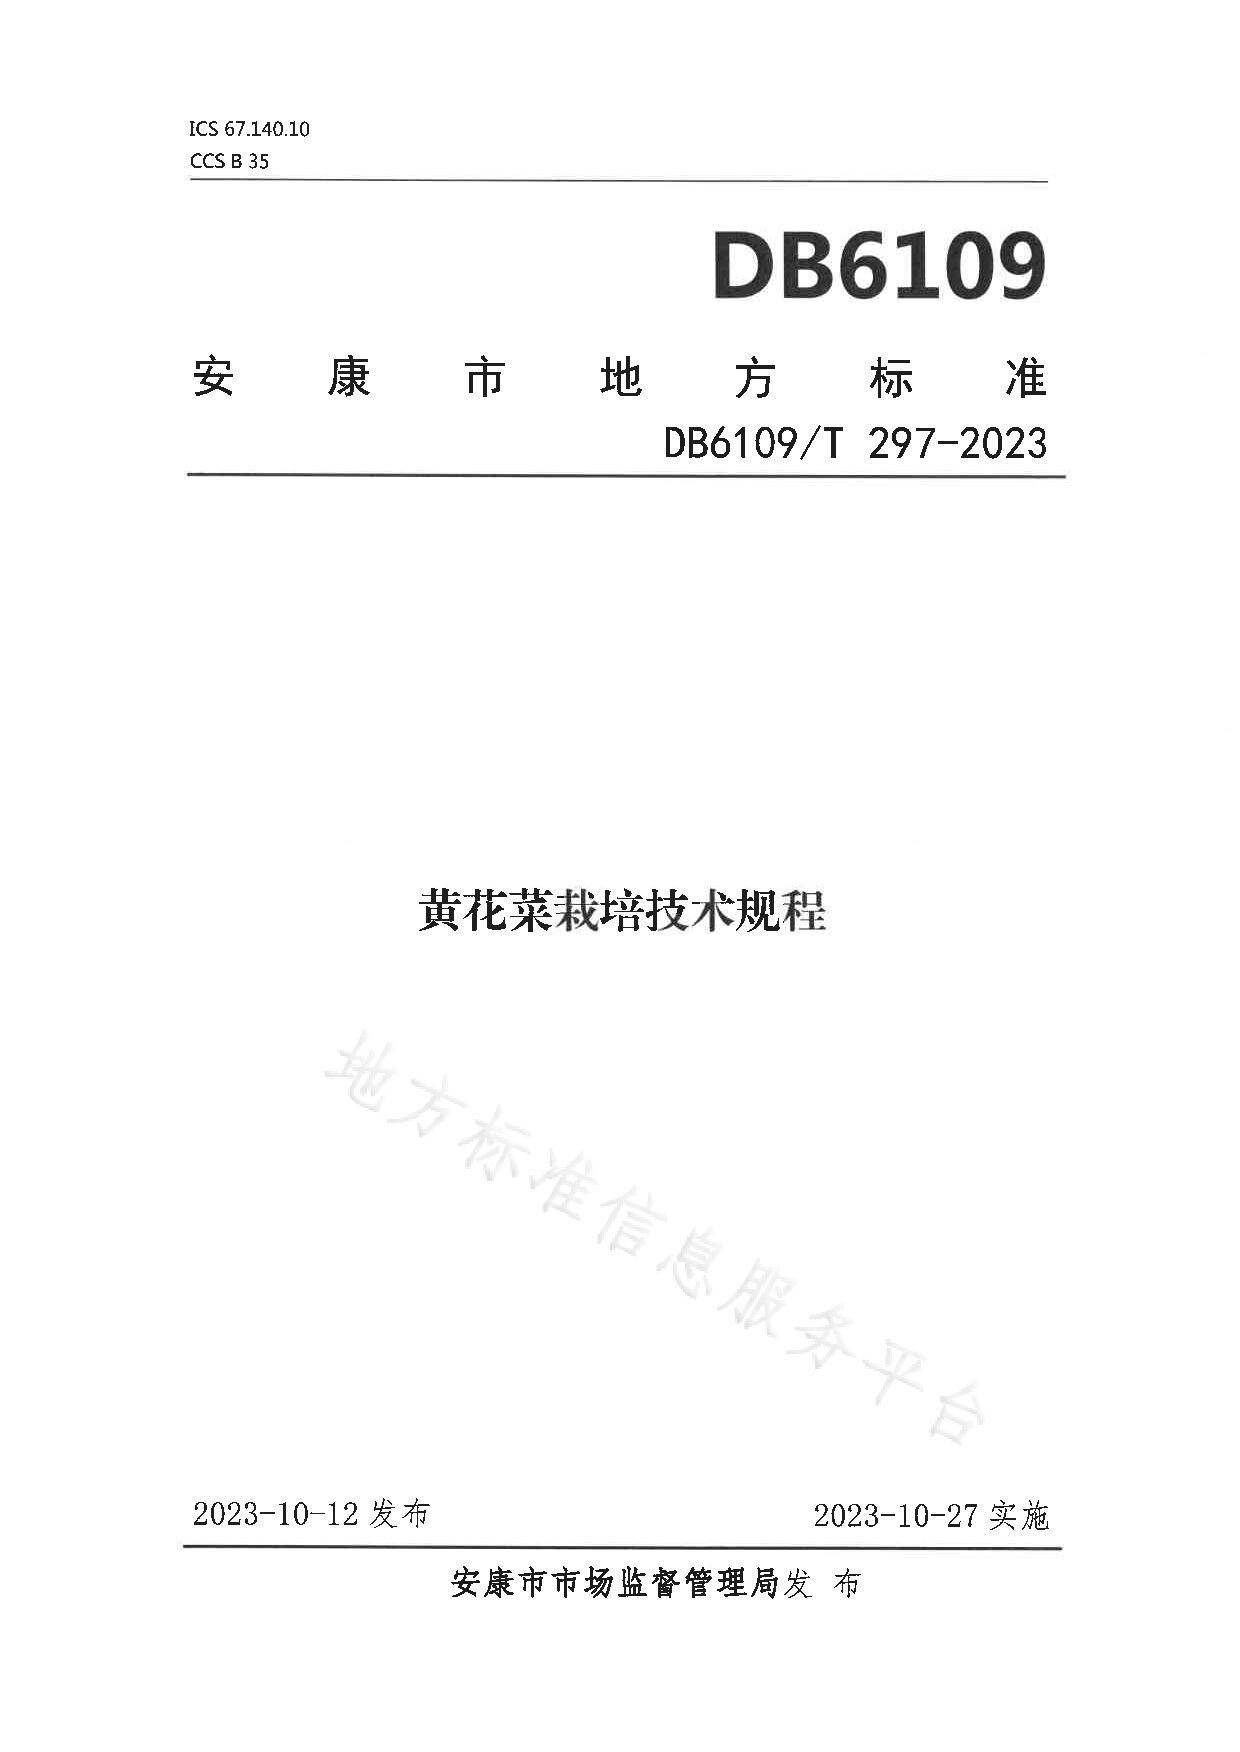 DB6109/T 297-2023